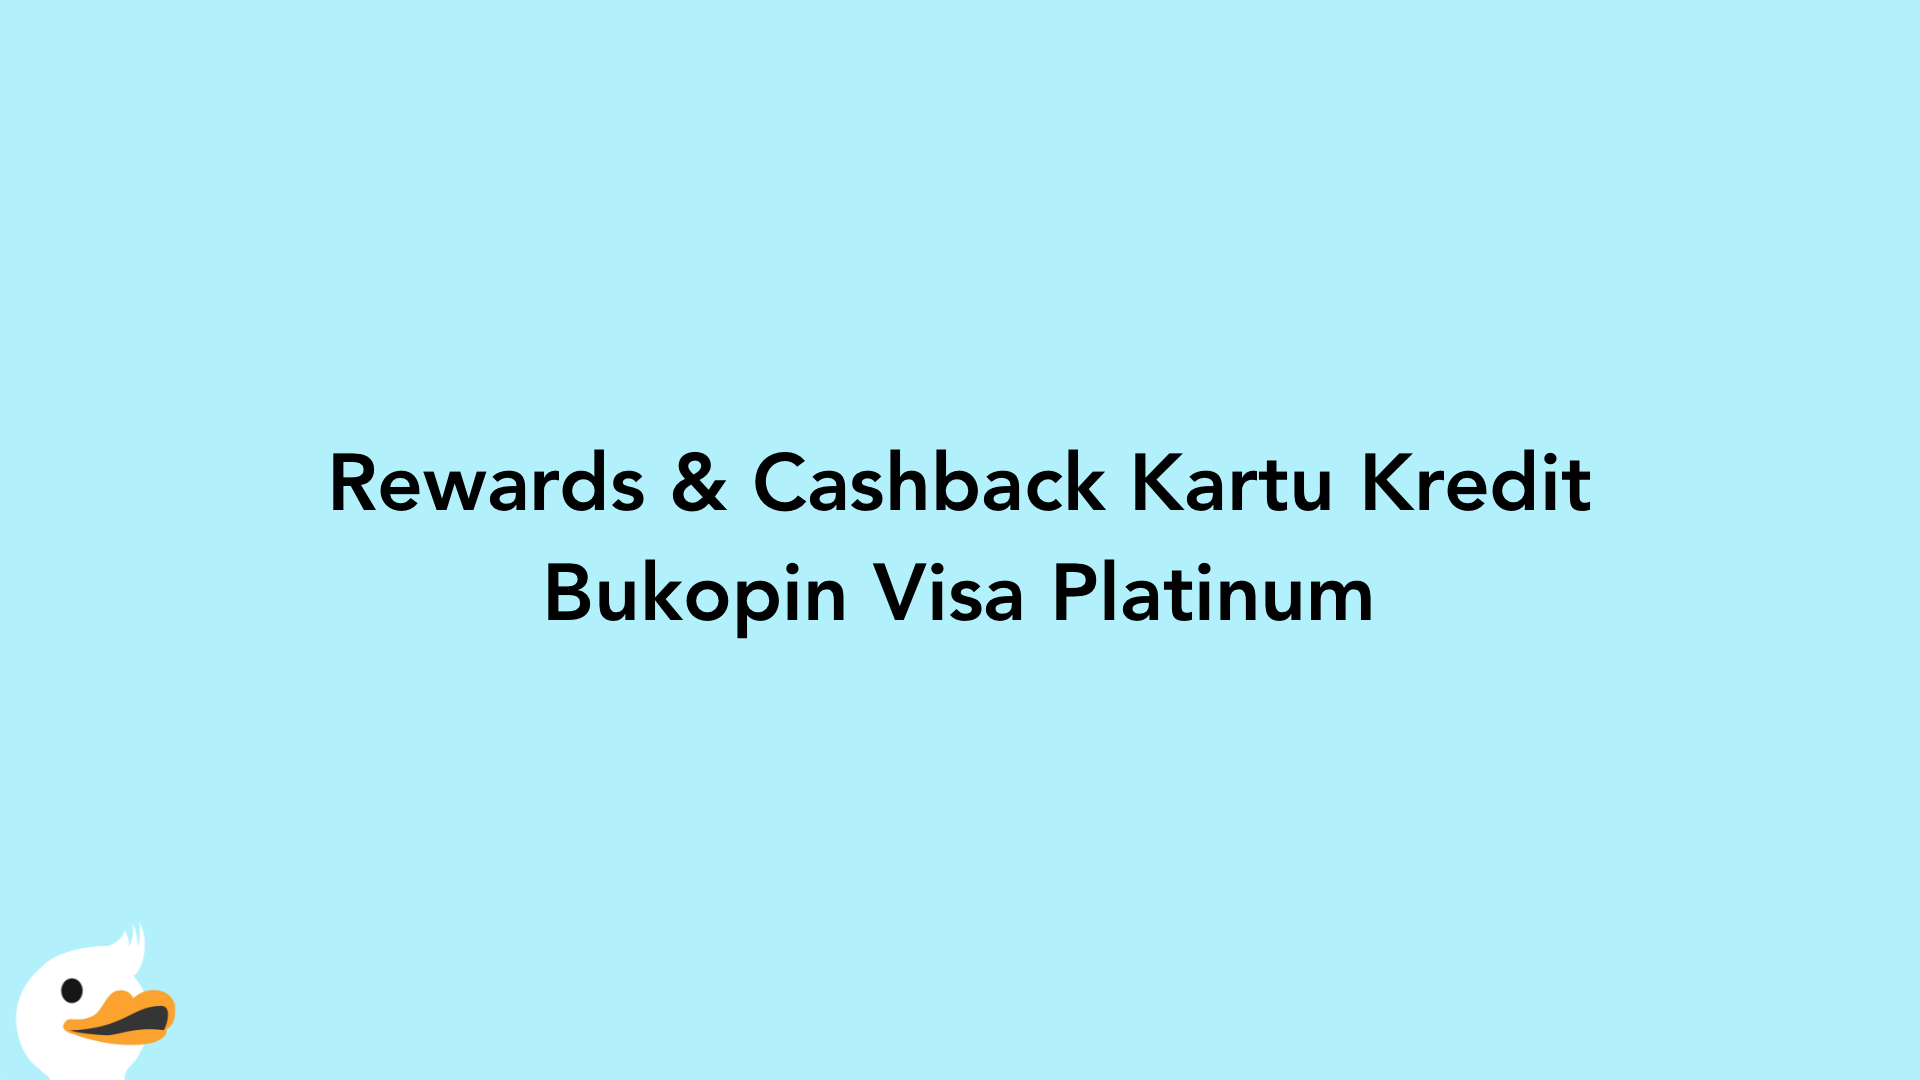 Rewards & Cashback Kartu Kredit Bukopin Visa Platinum